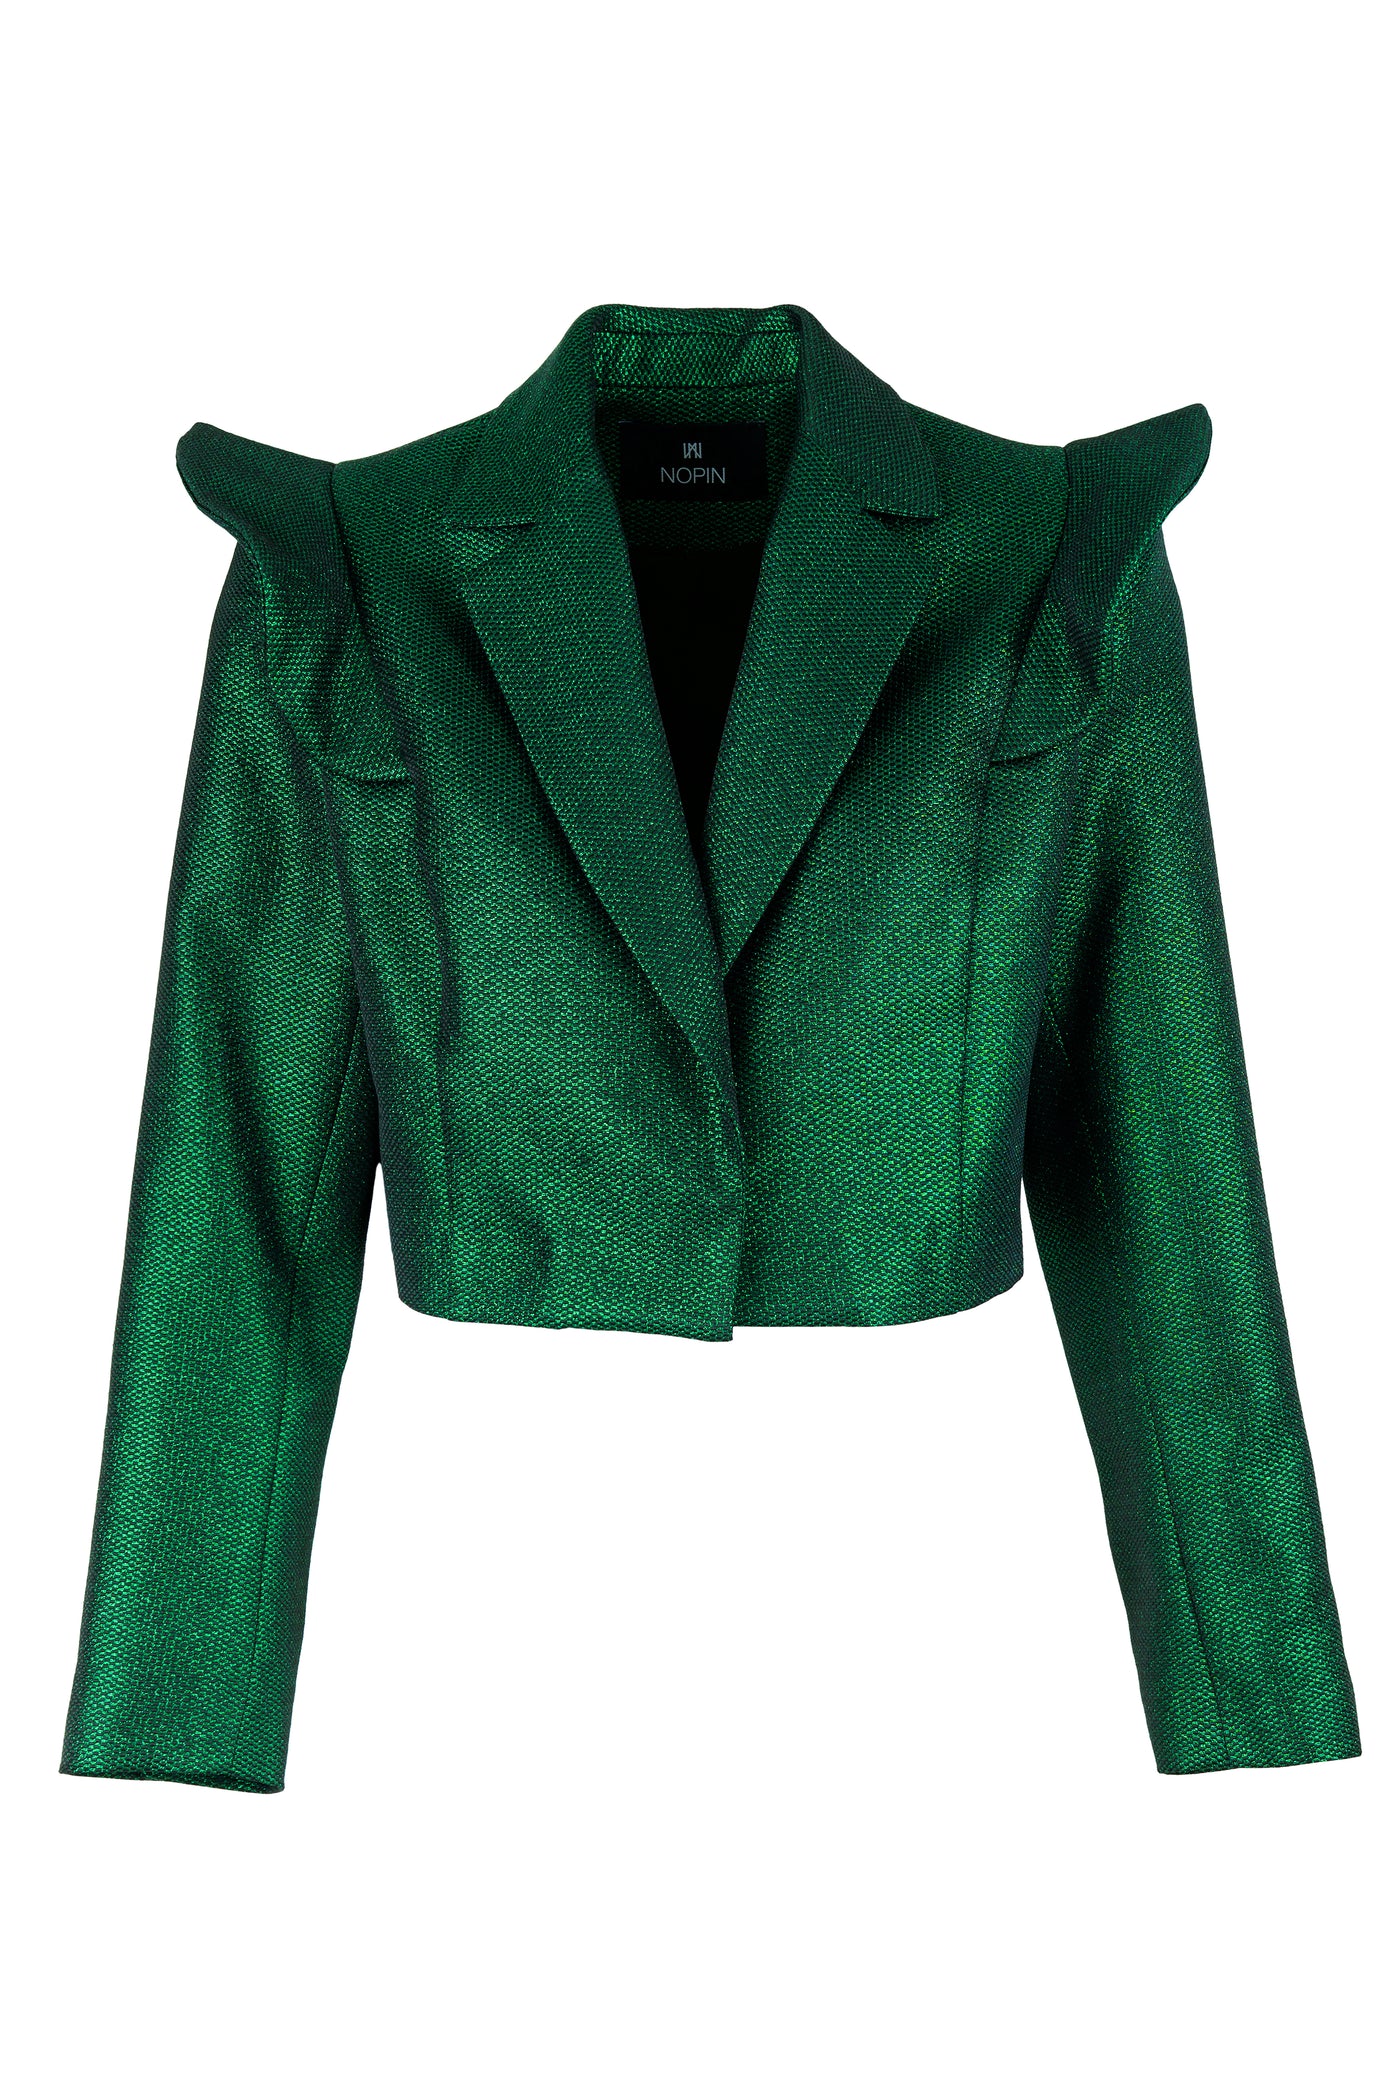 Glossy Green Short Blazer